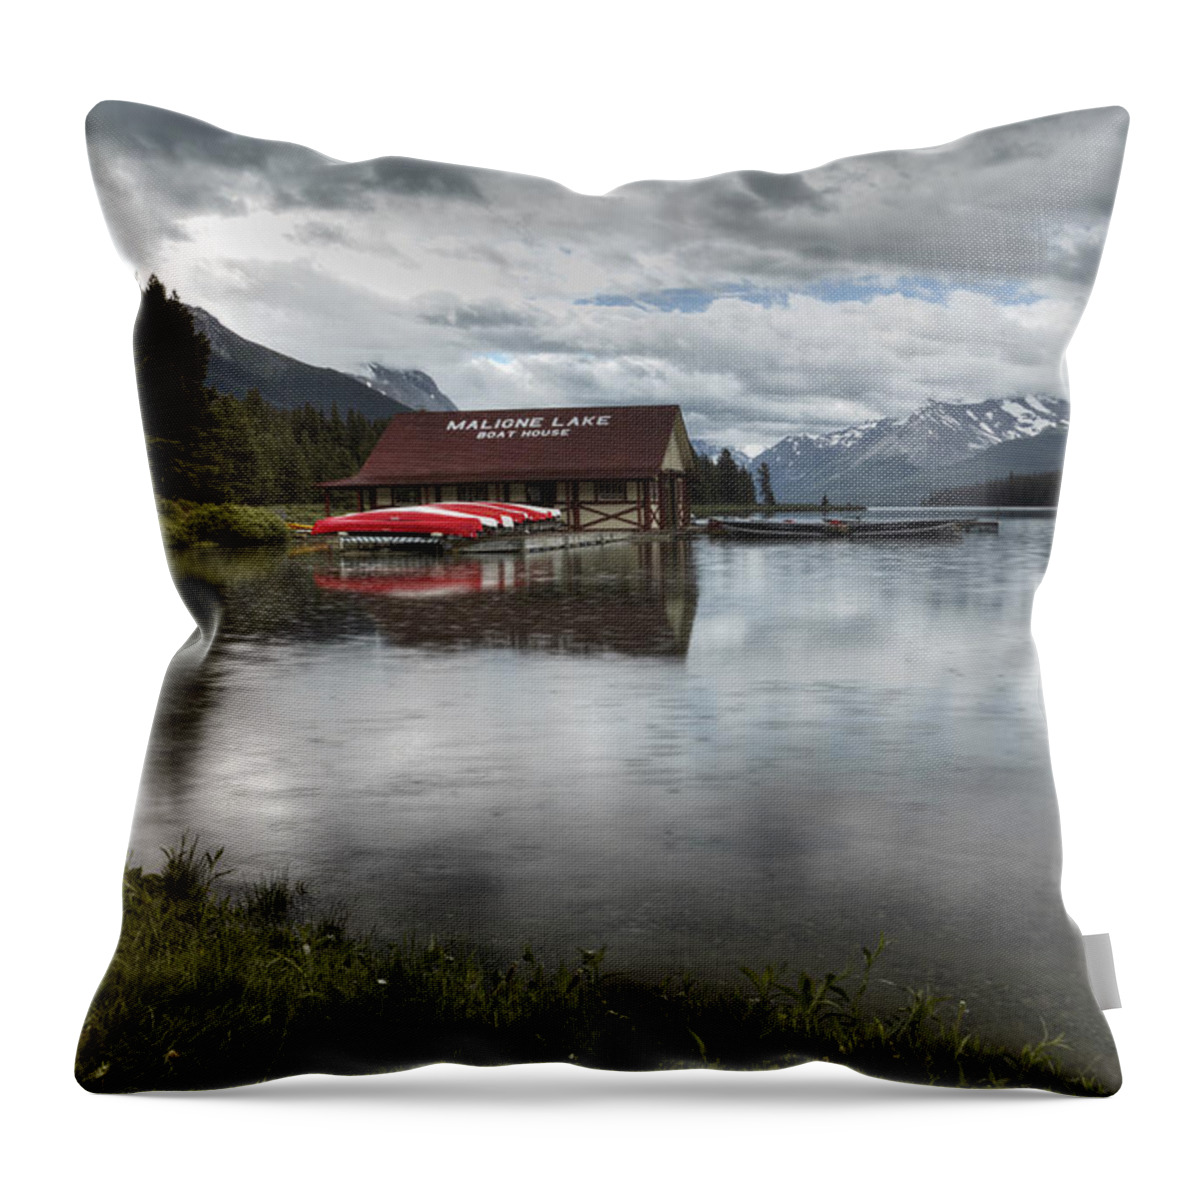 Maligne Lake Throw Pillow featuring the digital art Maligne Lake under the rain by Diane Dugas